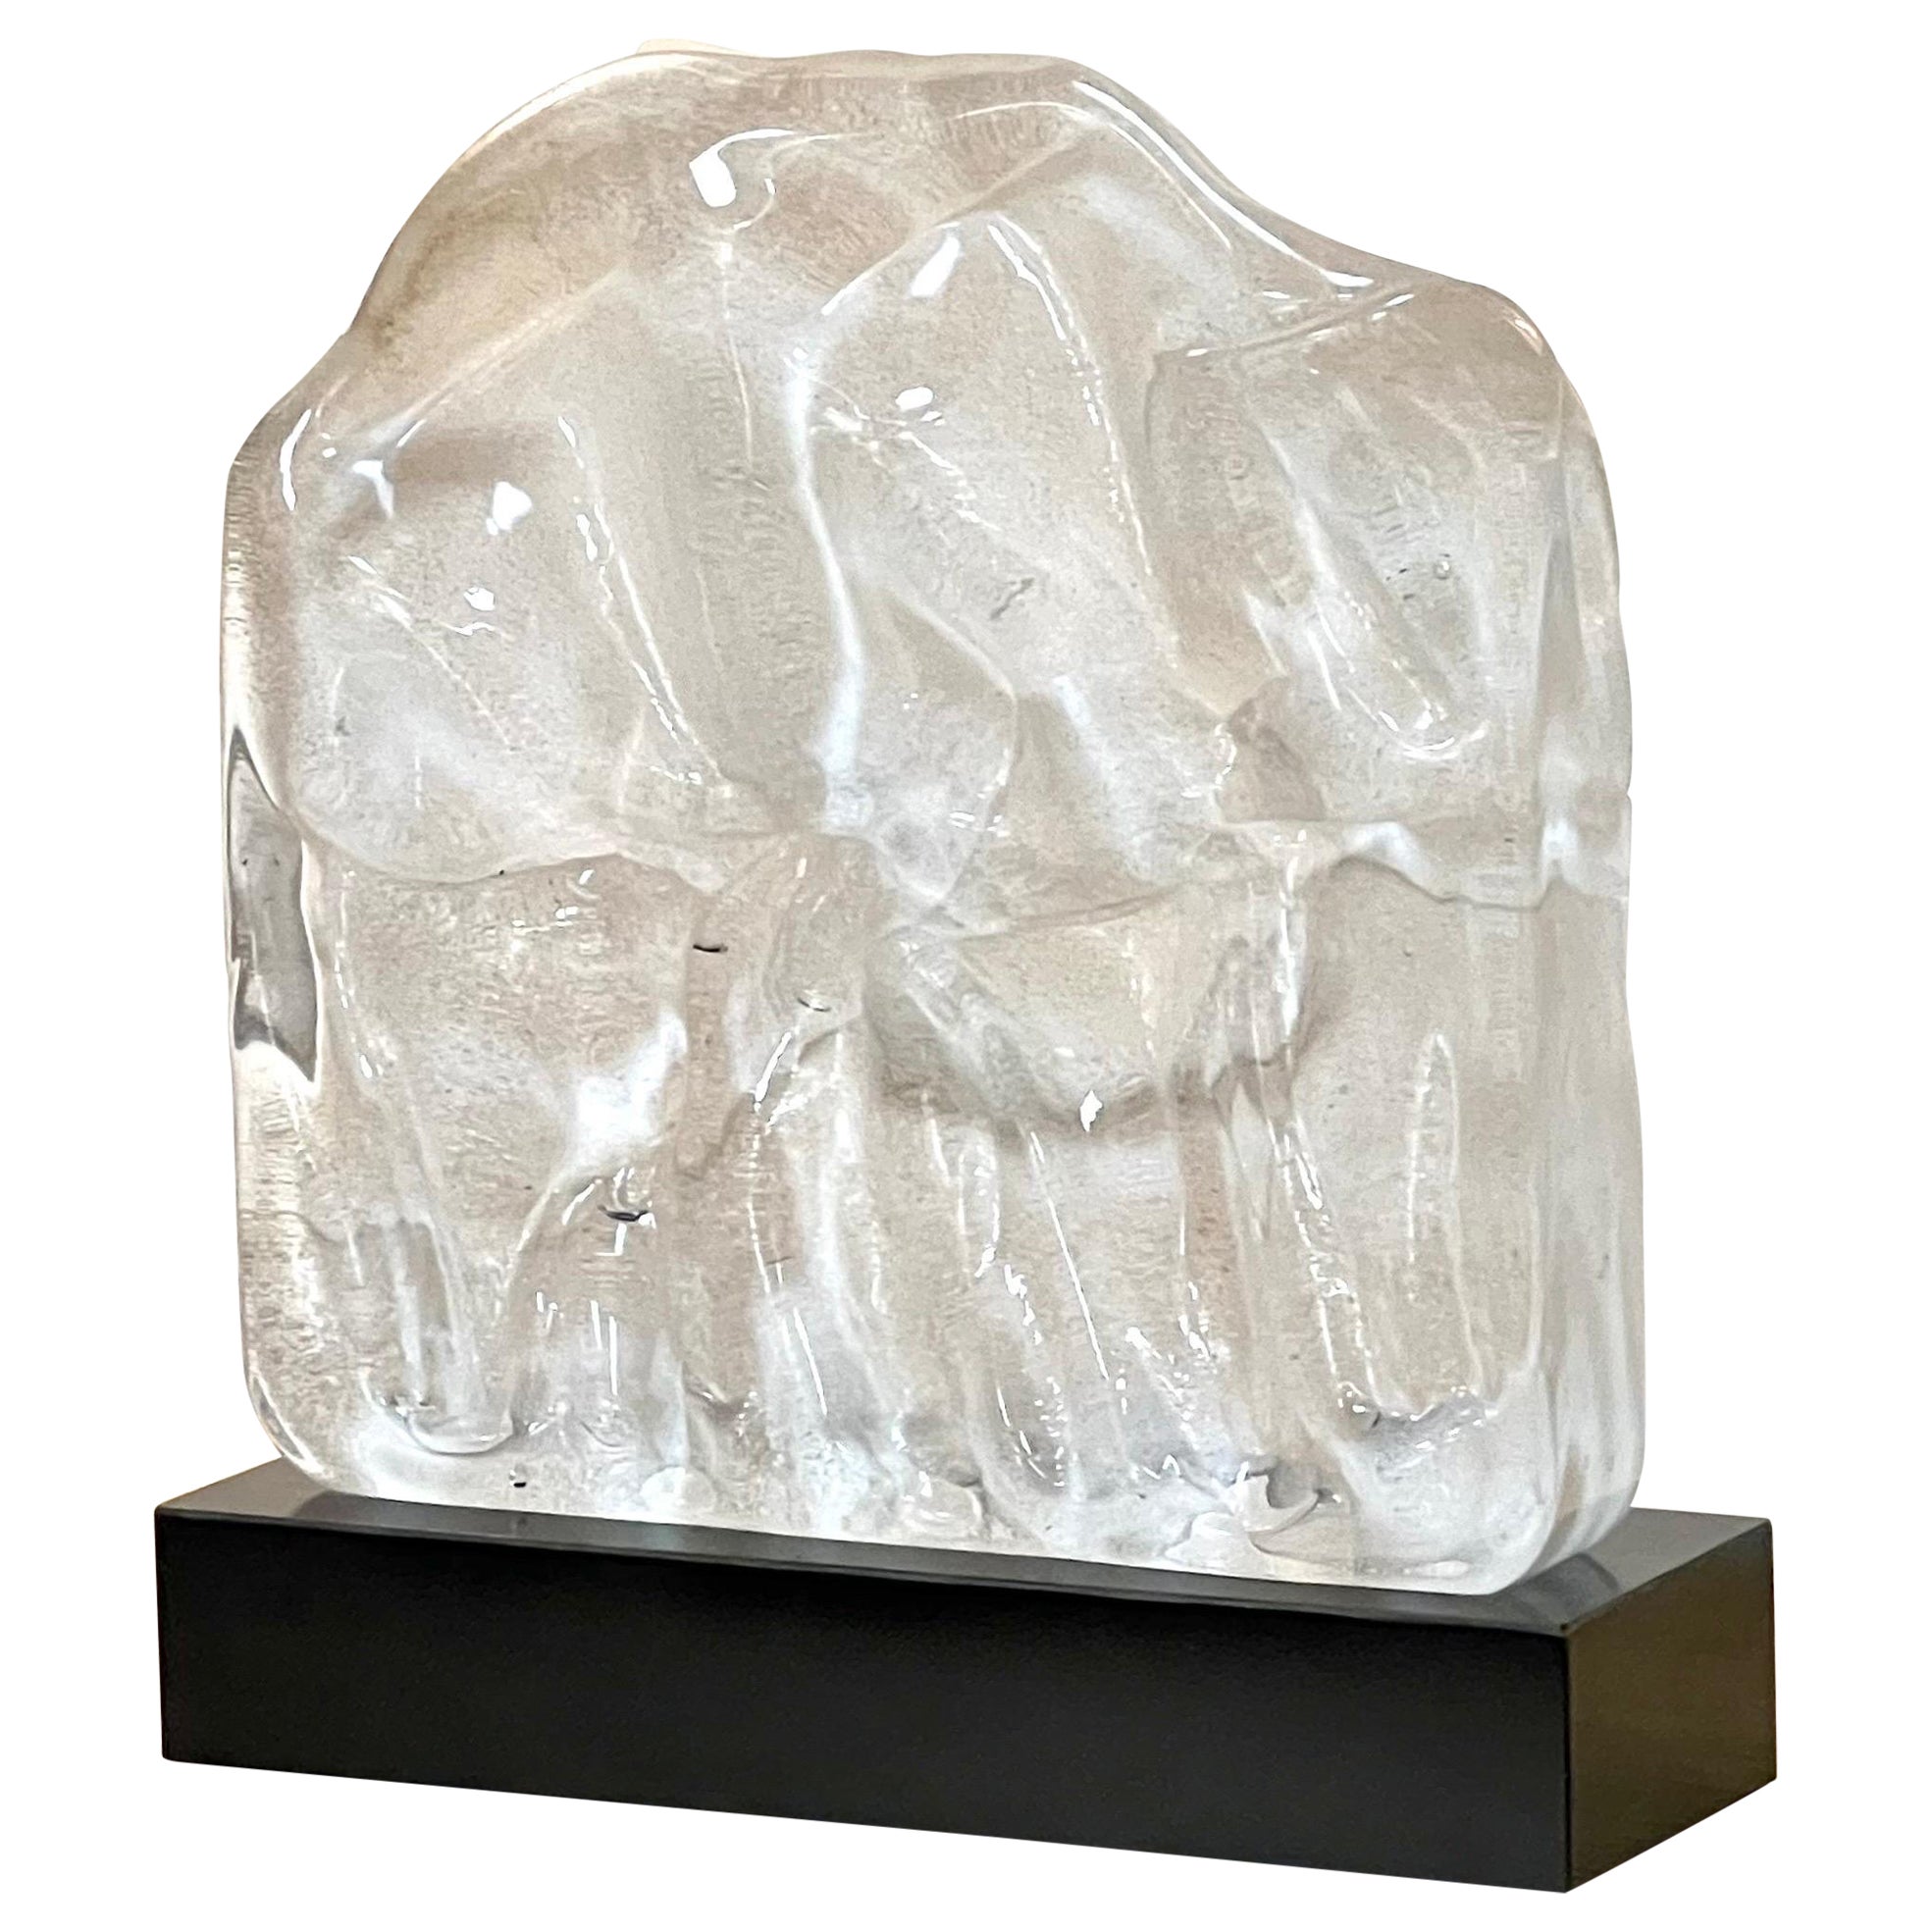 Michael Lax Rare Modernist Glass Sculpture, 1976 For Sale